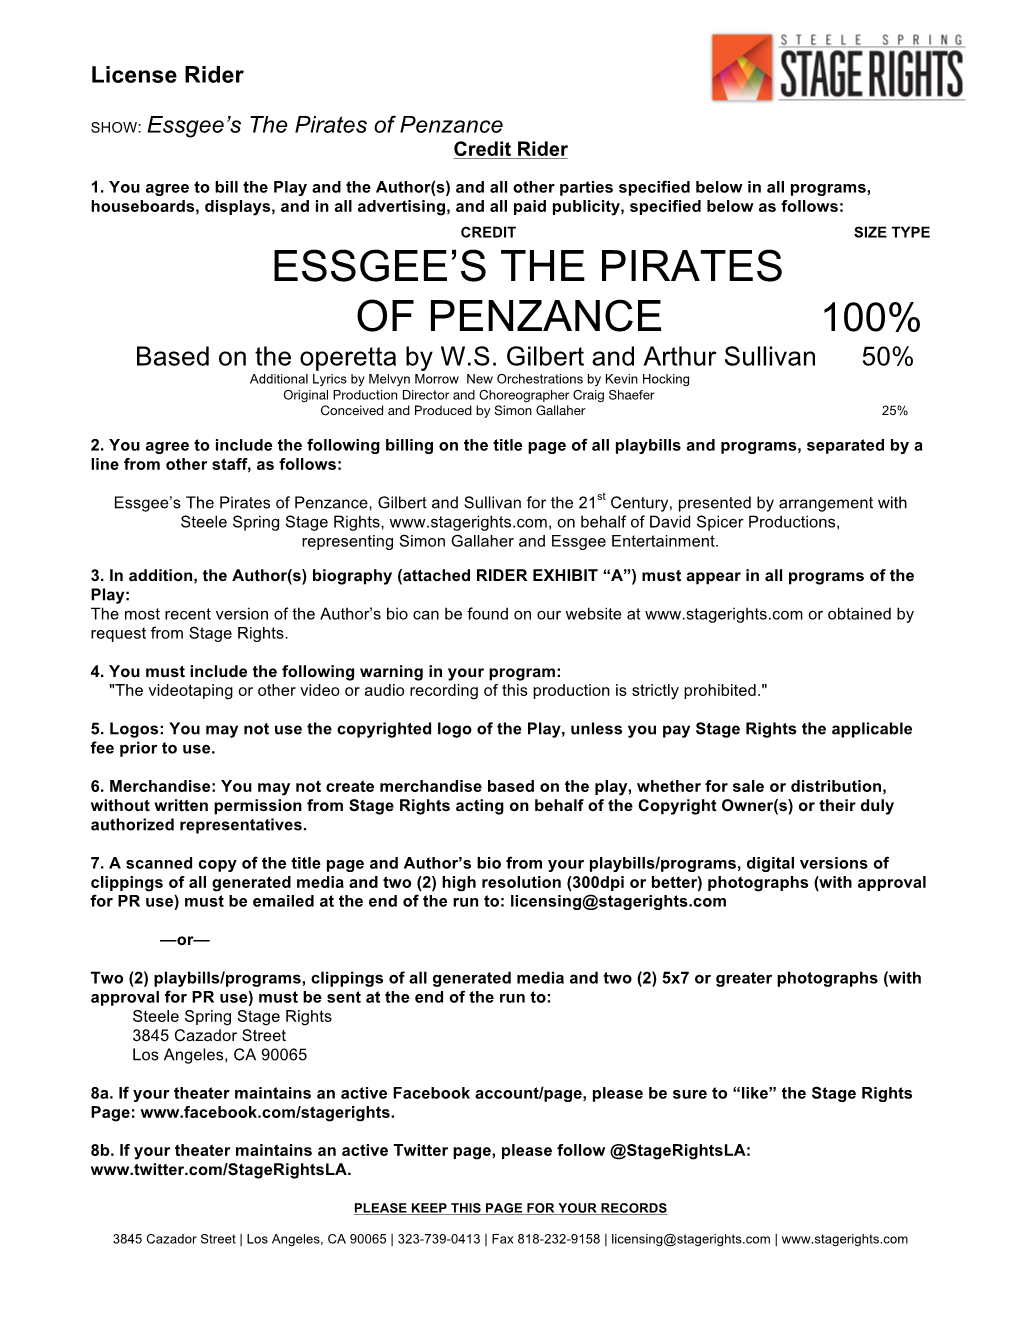 Essgee's the Pirates of Penzance